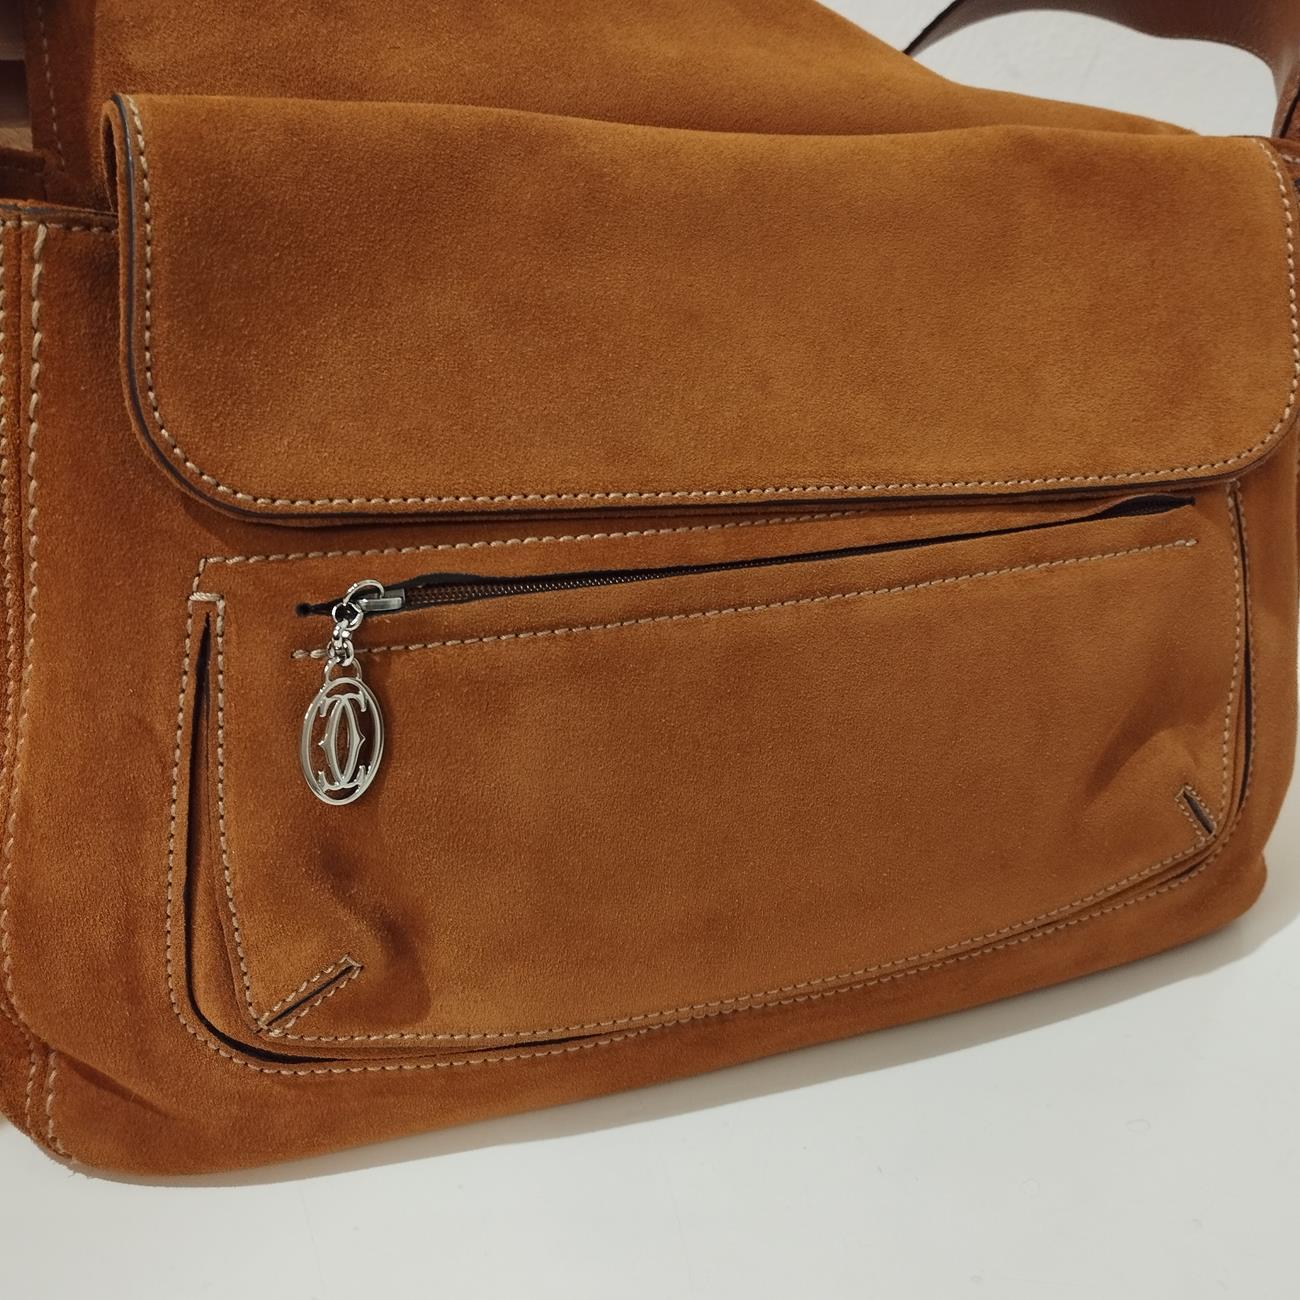 Cartier Marcello saddle bag size Unica For Sale 4